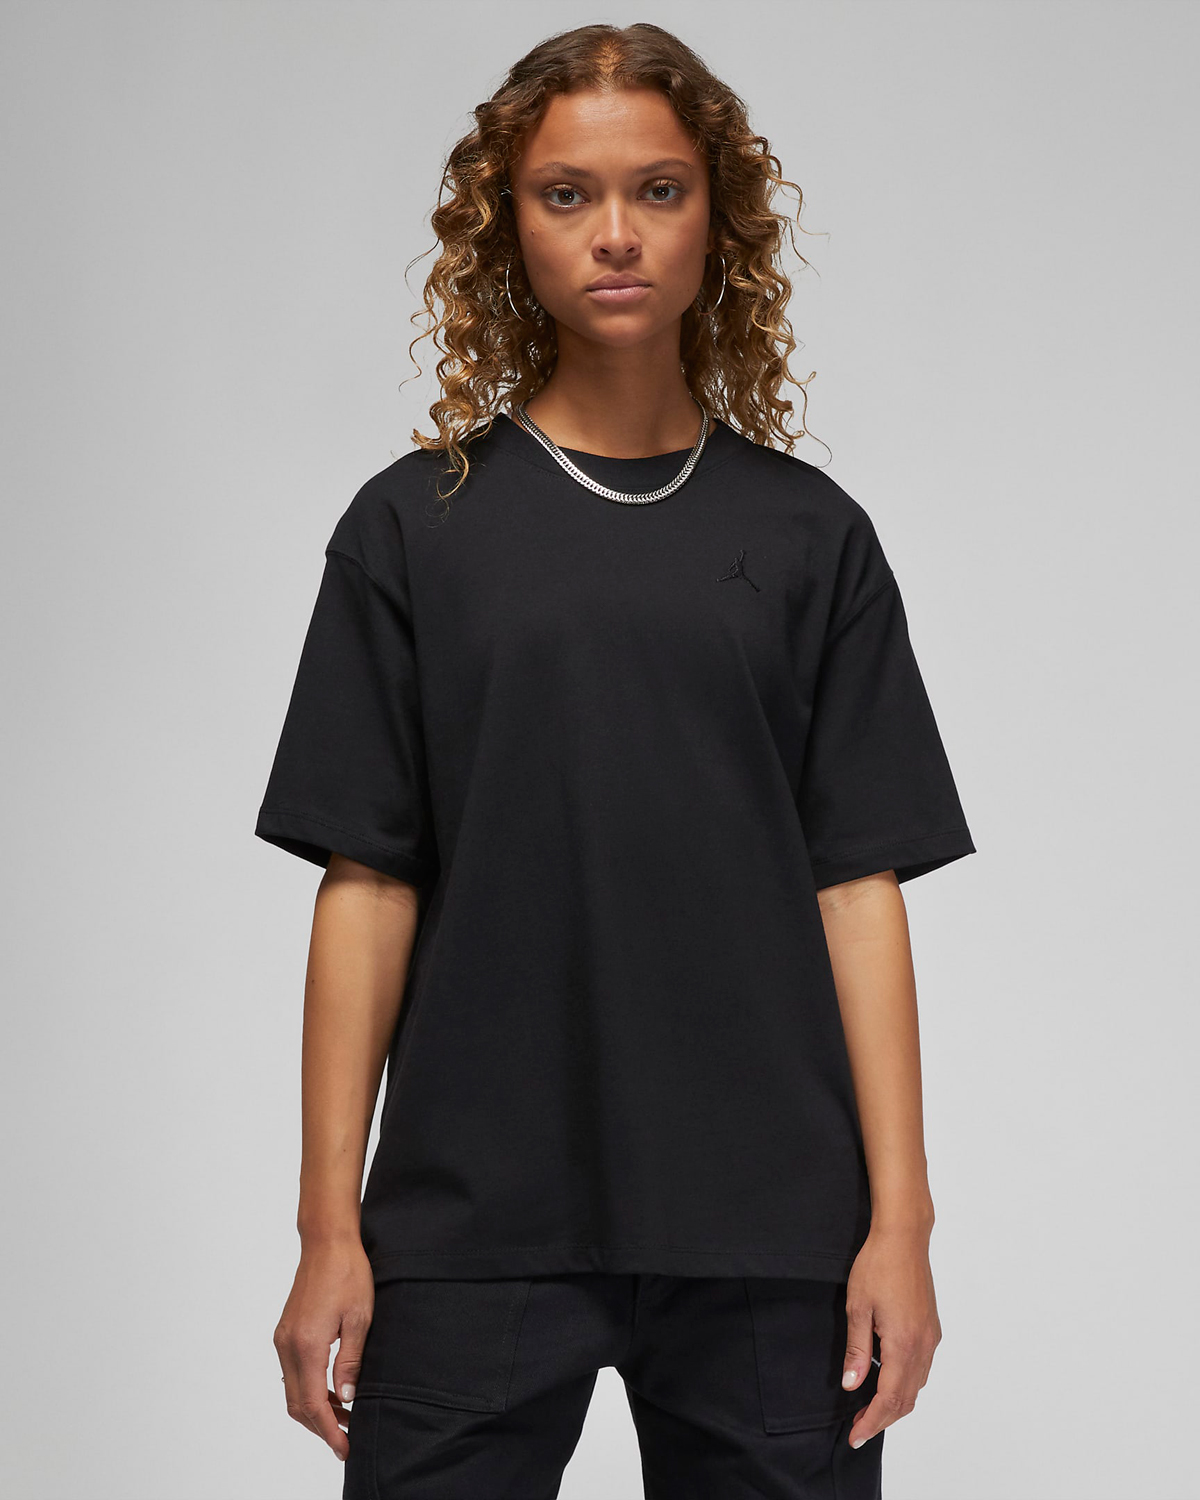 Jordan-Essentials-Womens-Shirt-Black